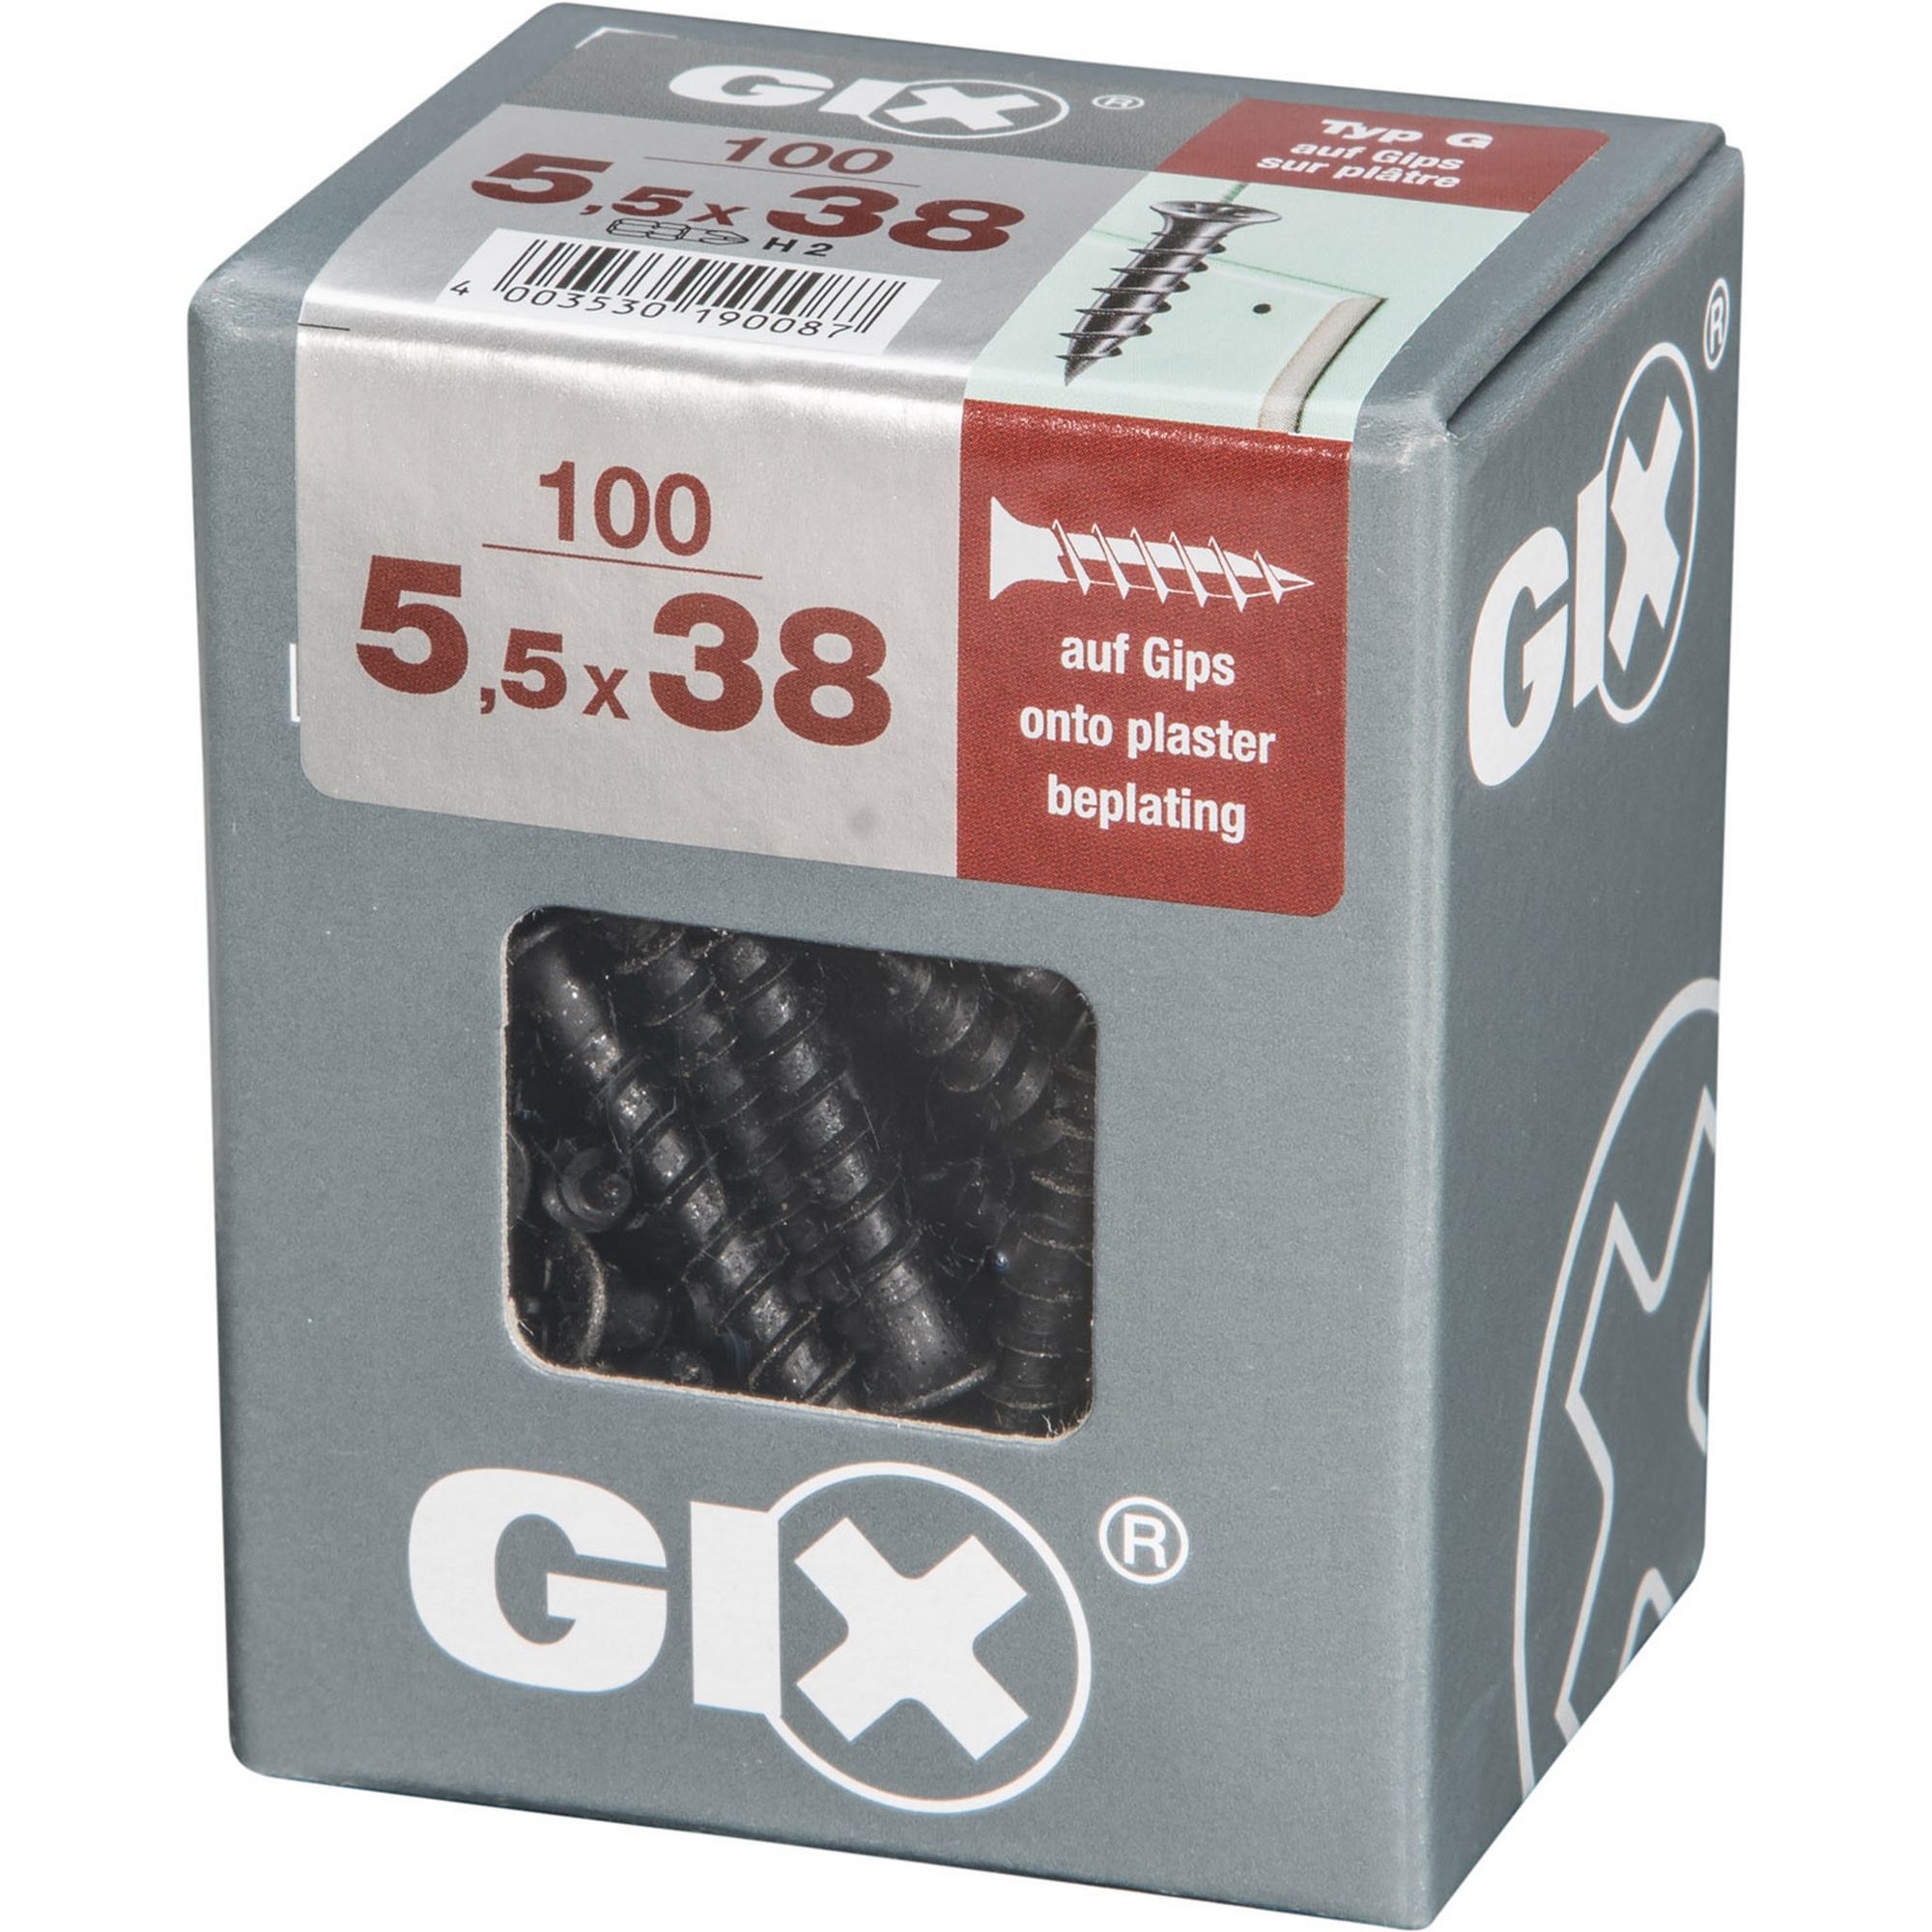 Trockenbauschraube 'Gix-G' PH2 Ø 5,5 x 38 mm 100 Stück + product picture